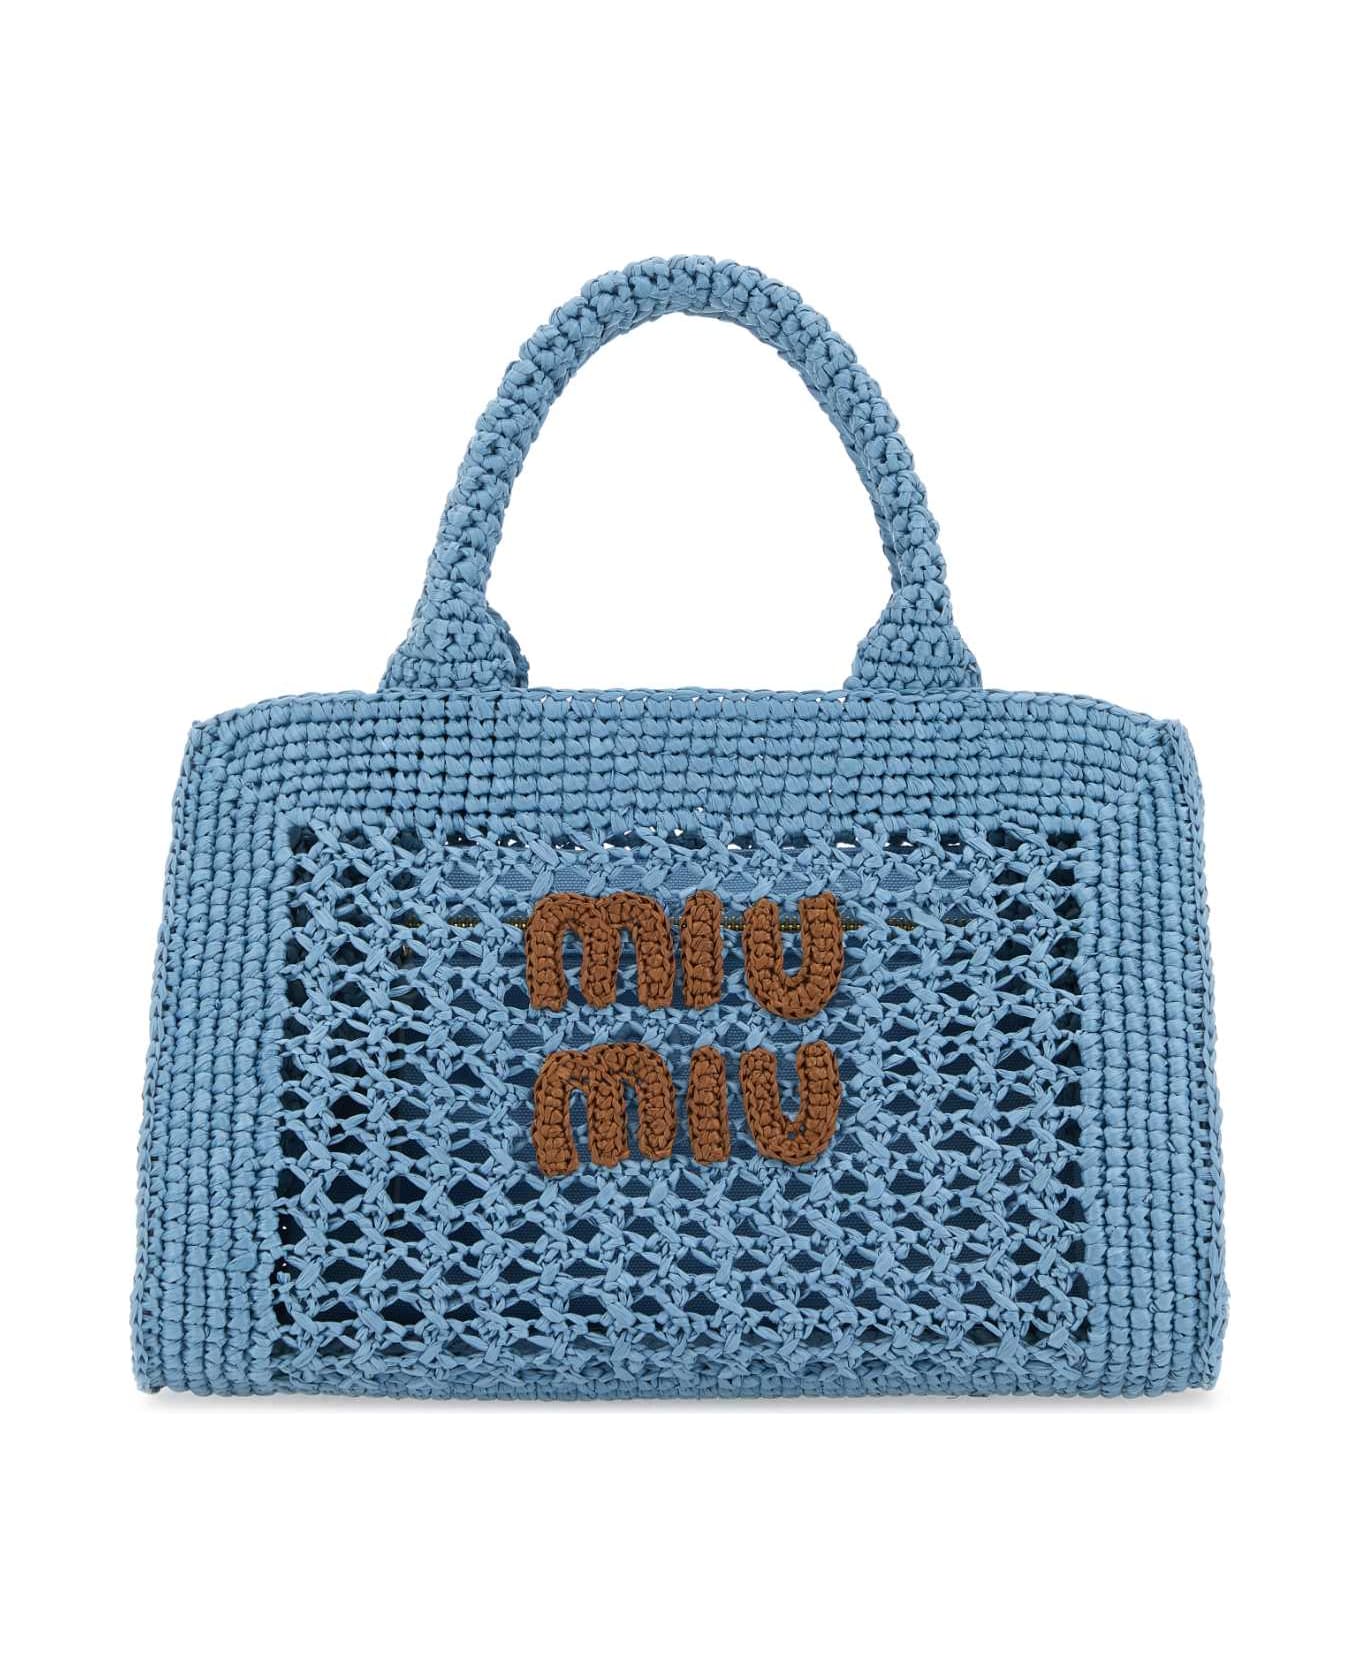 Miu Miu Light Blue Crochet Handbag - CELESTECOGNAC トートバッグ